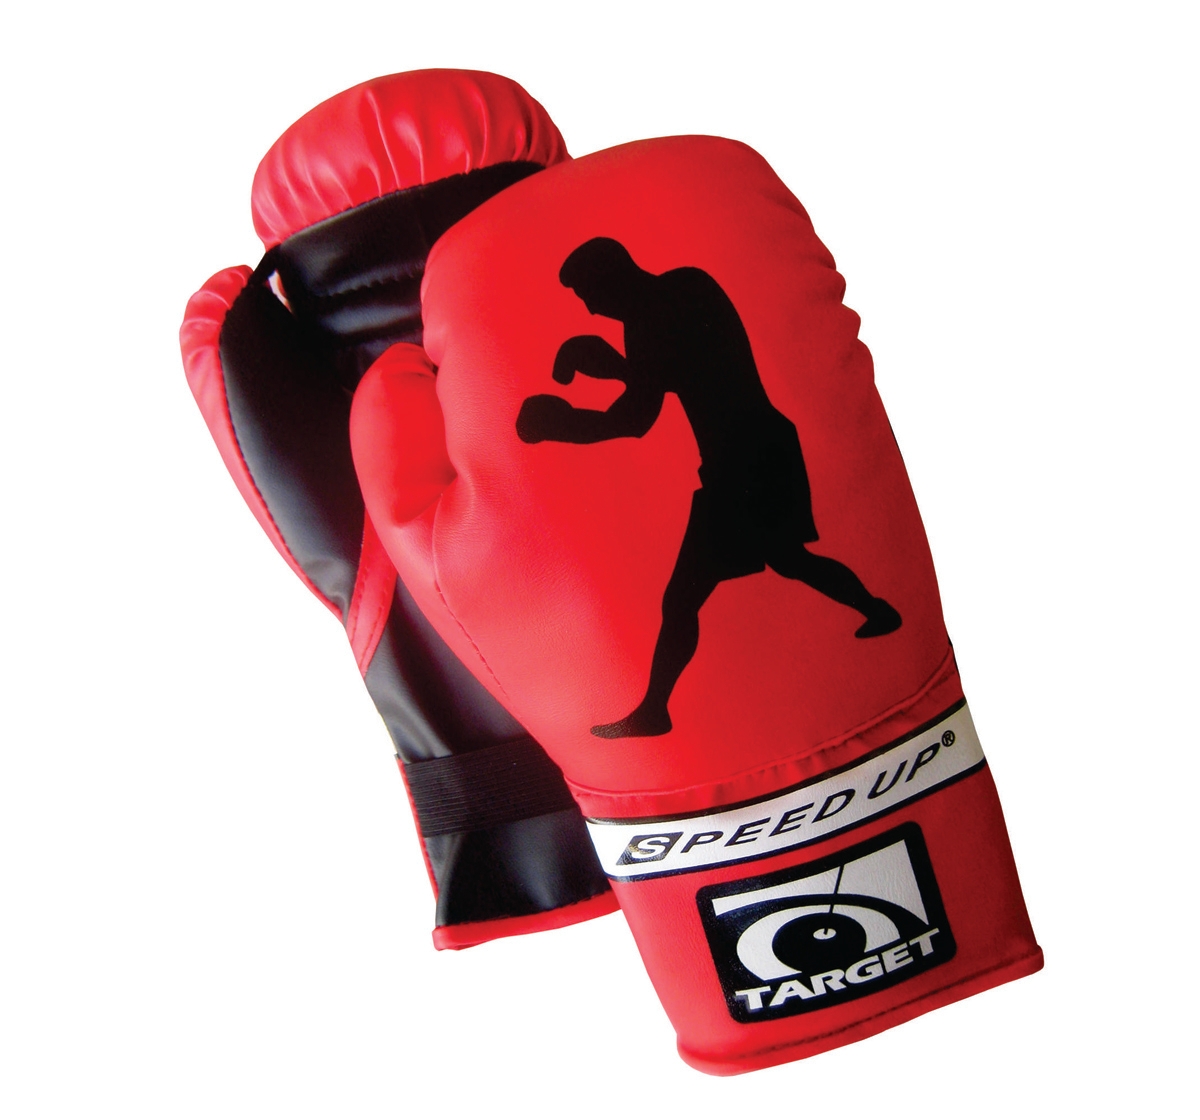 Speed Up Junior Boxing Gloves Set Indoor Training Multicolour 8Y+